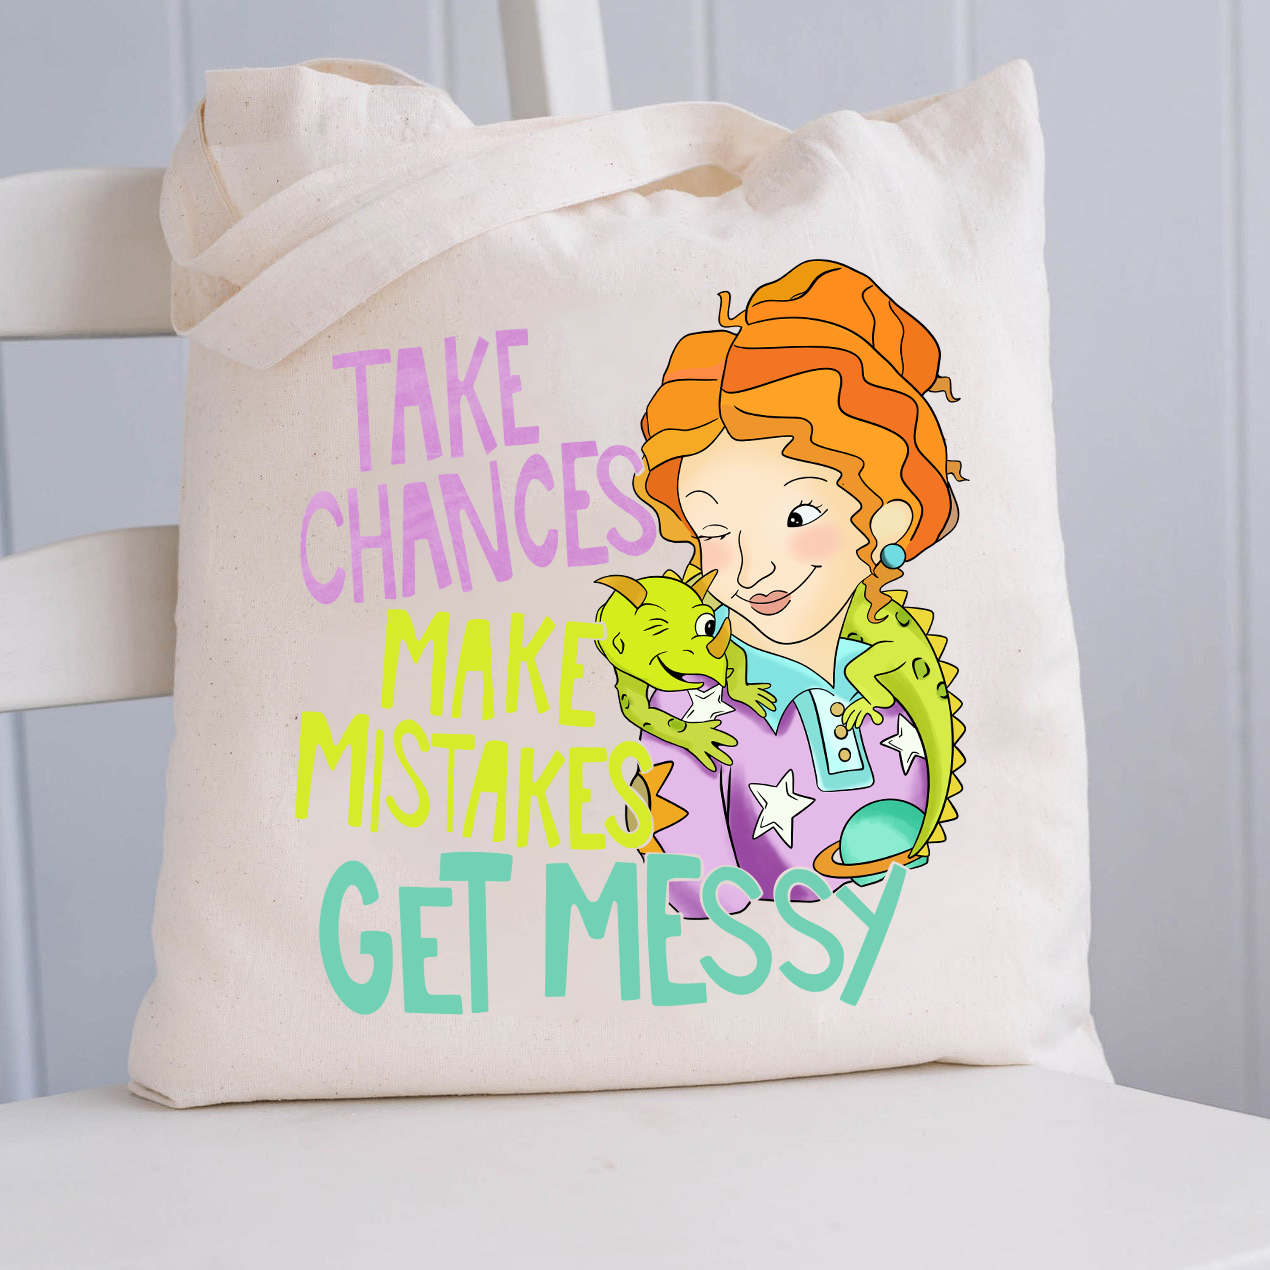 Take Chances Make Mistakes Get Messy Beauty Tote Bag